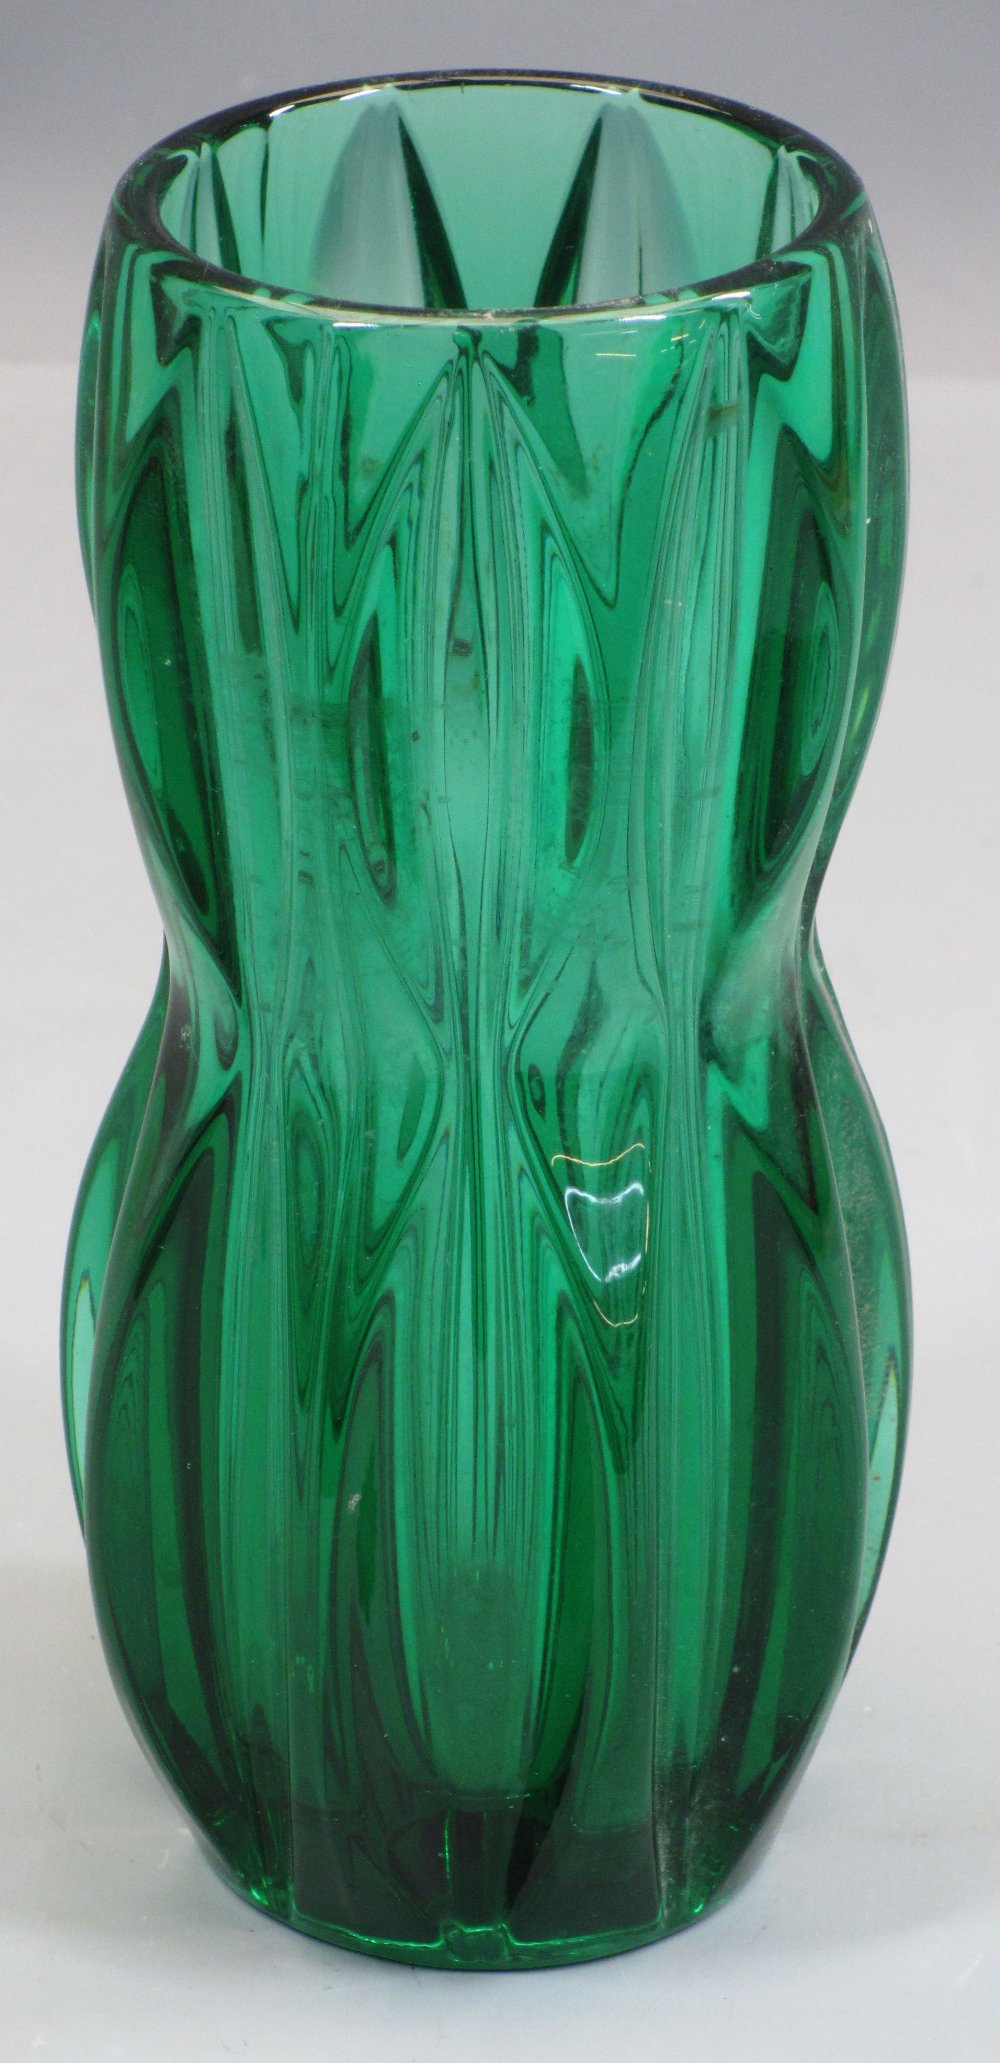 ART GLASSWARE - multi-coloured heavy glass vases, 35cms H the tallest, ETC - Image 4 of 5